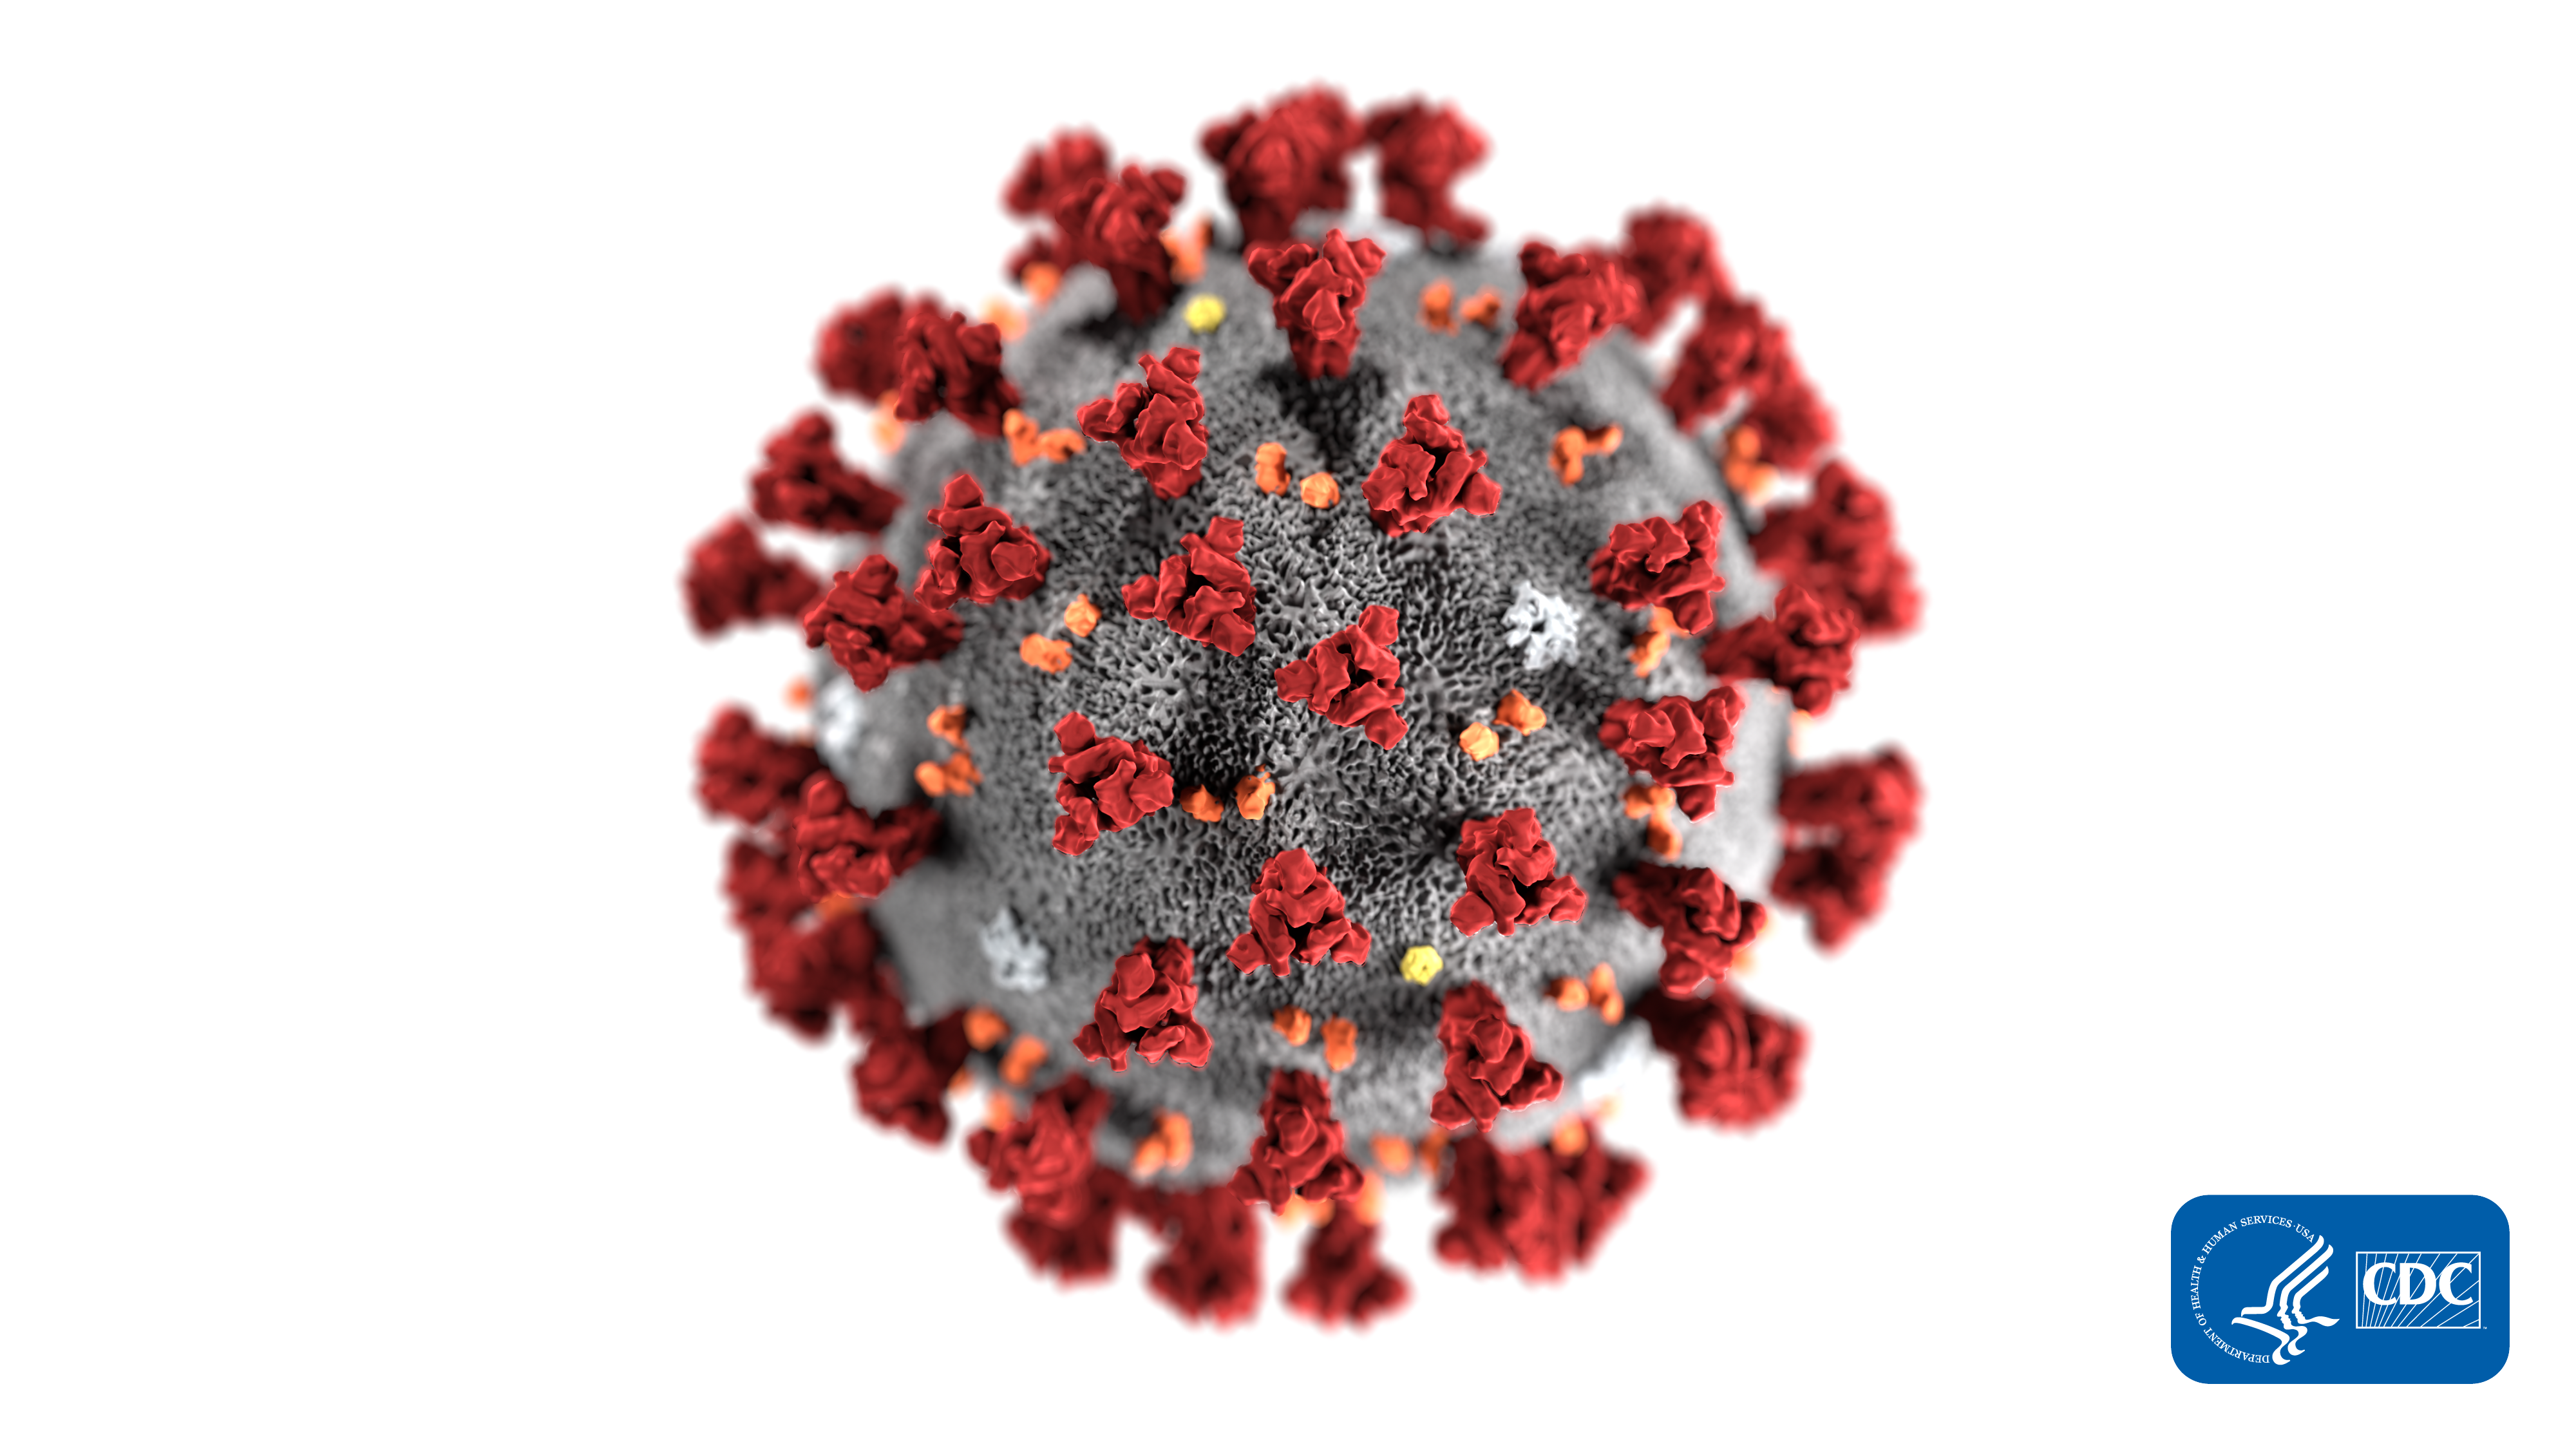 Wyoming Preparing as State’s Coronavirus Risk Still Low